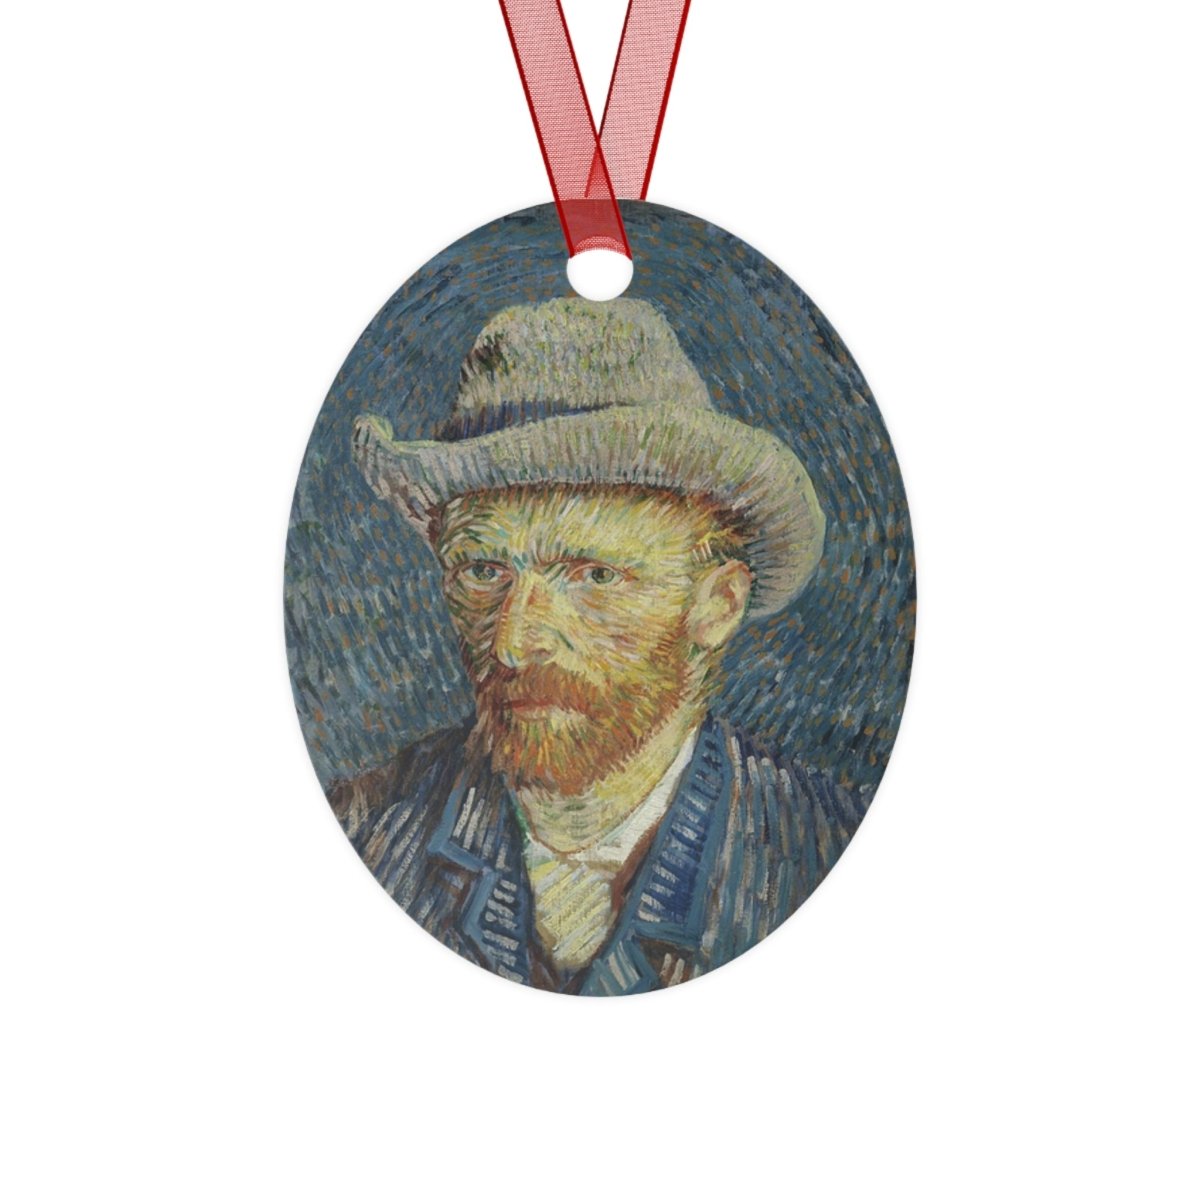 Vincent van Gogh Metal Ornaments - One Small Step History